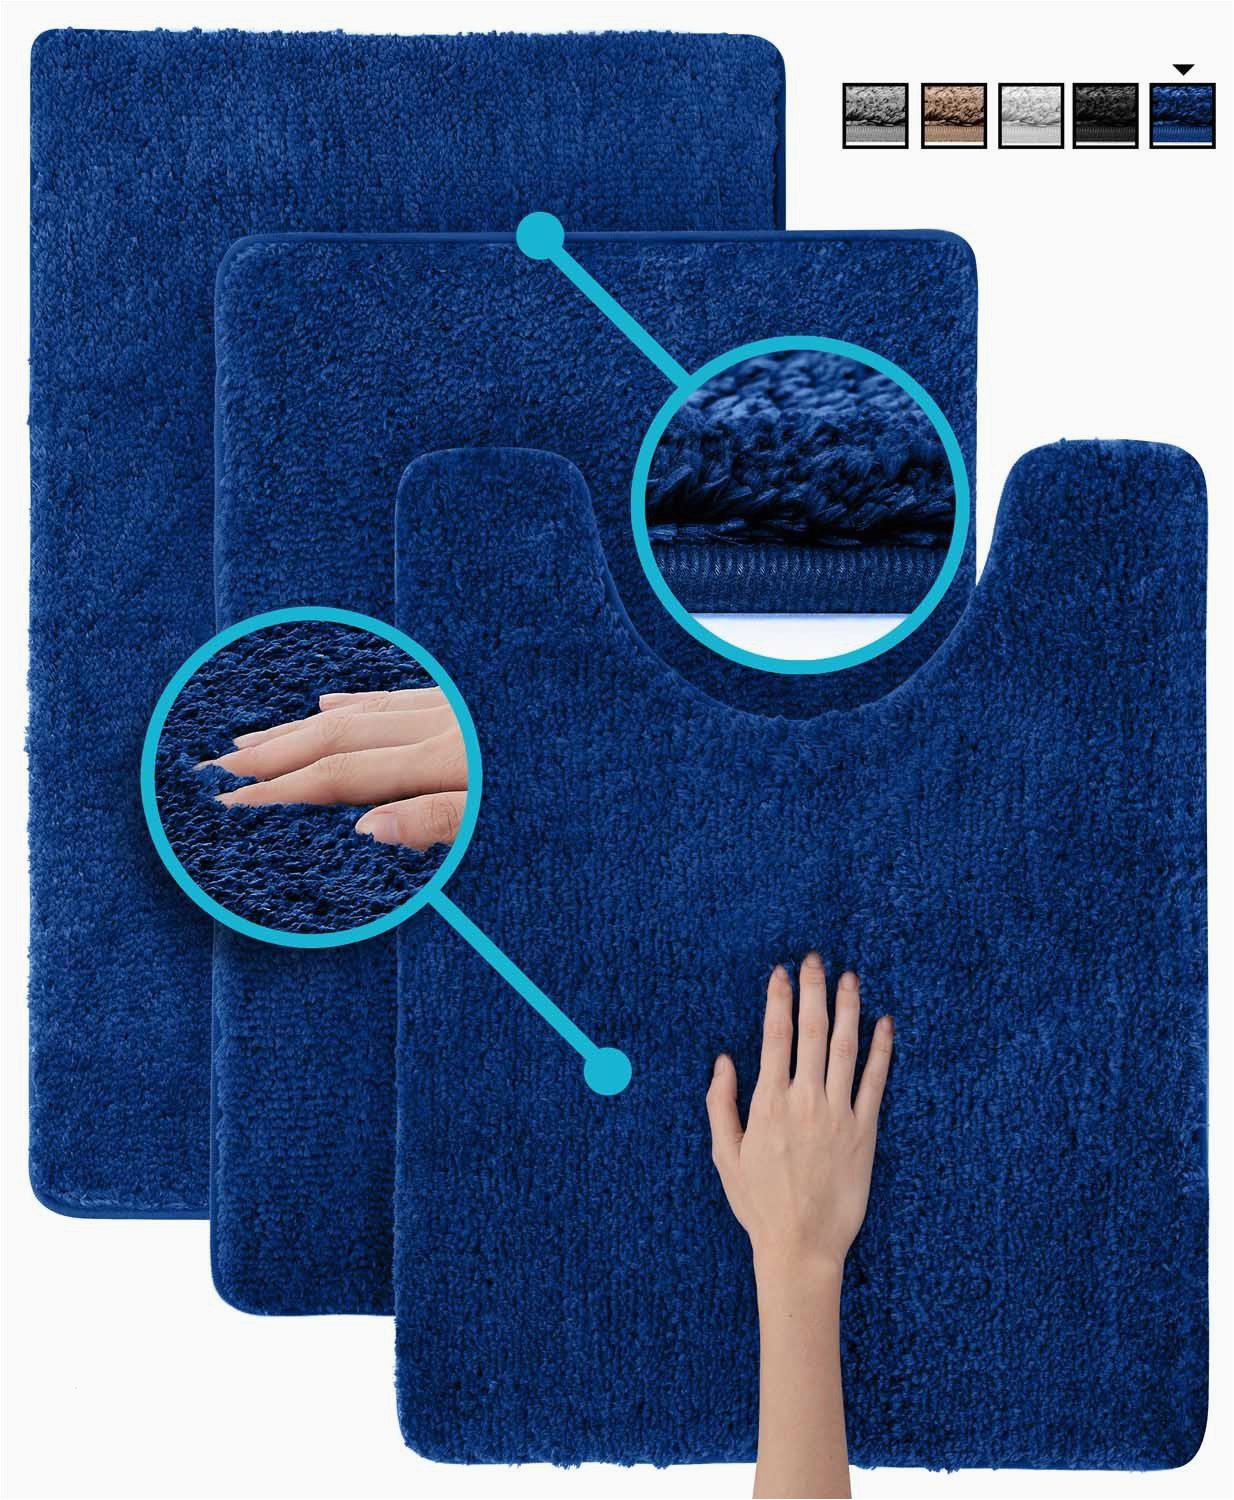 luxe rug dark blue plush bathroom rugs set bath shower mat w non slip microfiber super absorbent rug alfombras para banos 3 dark blue